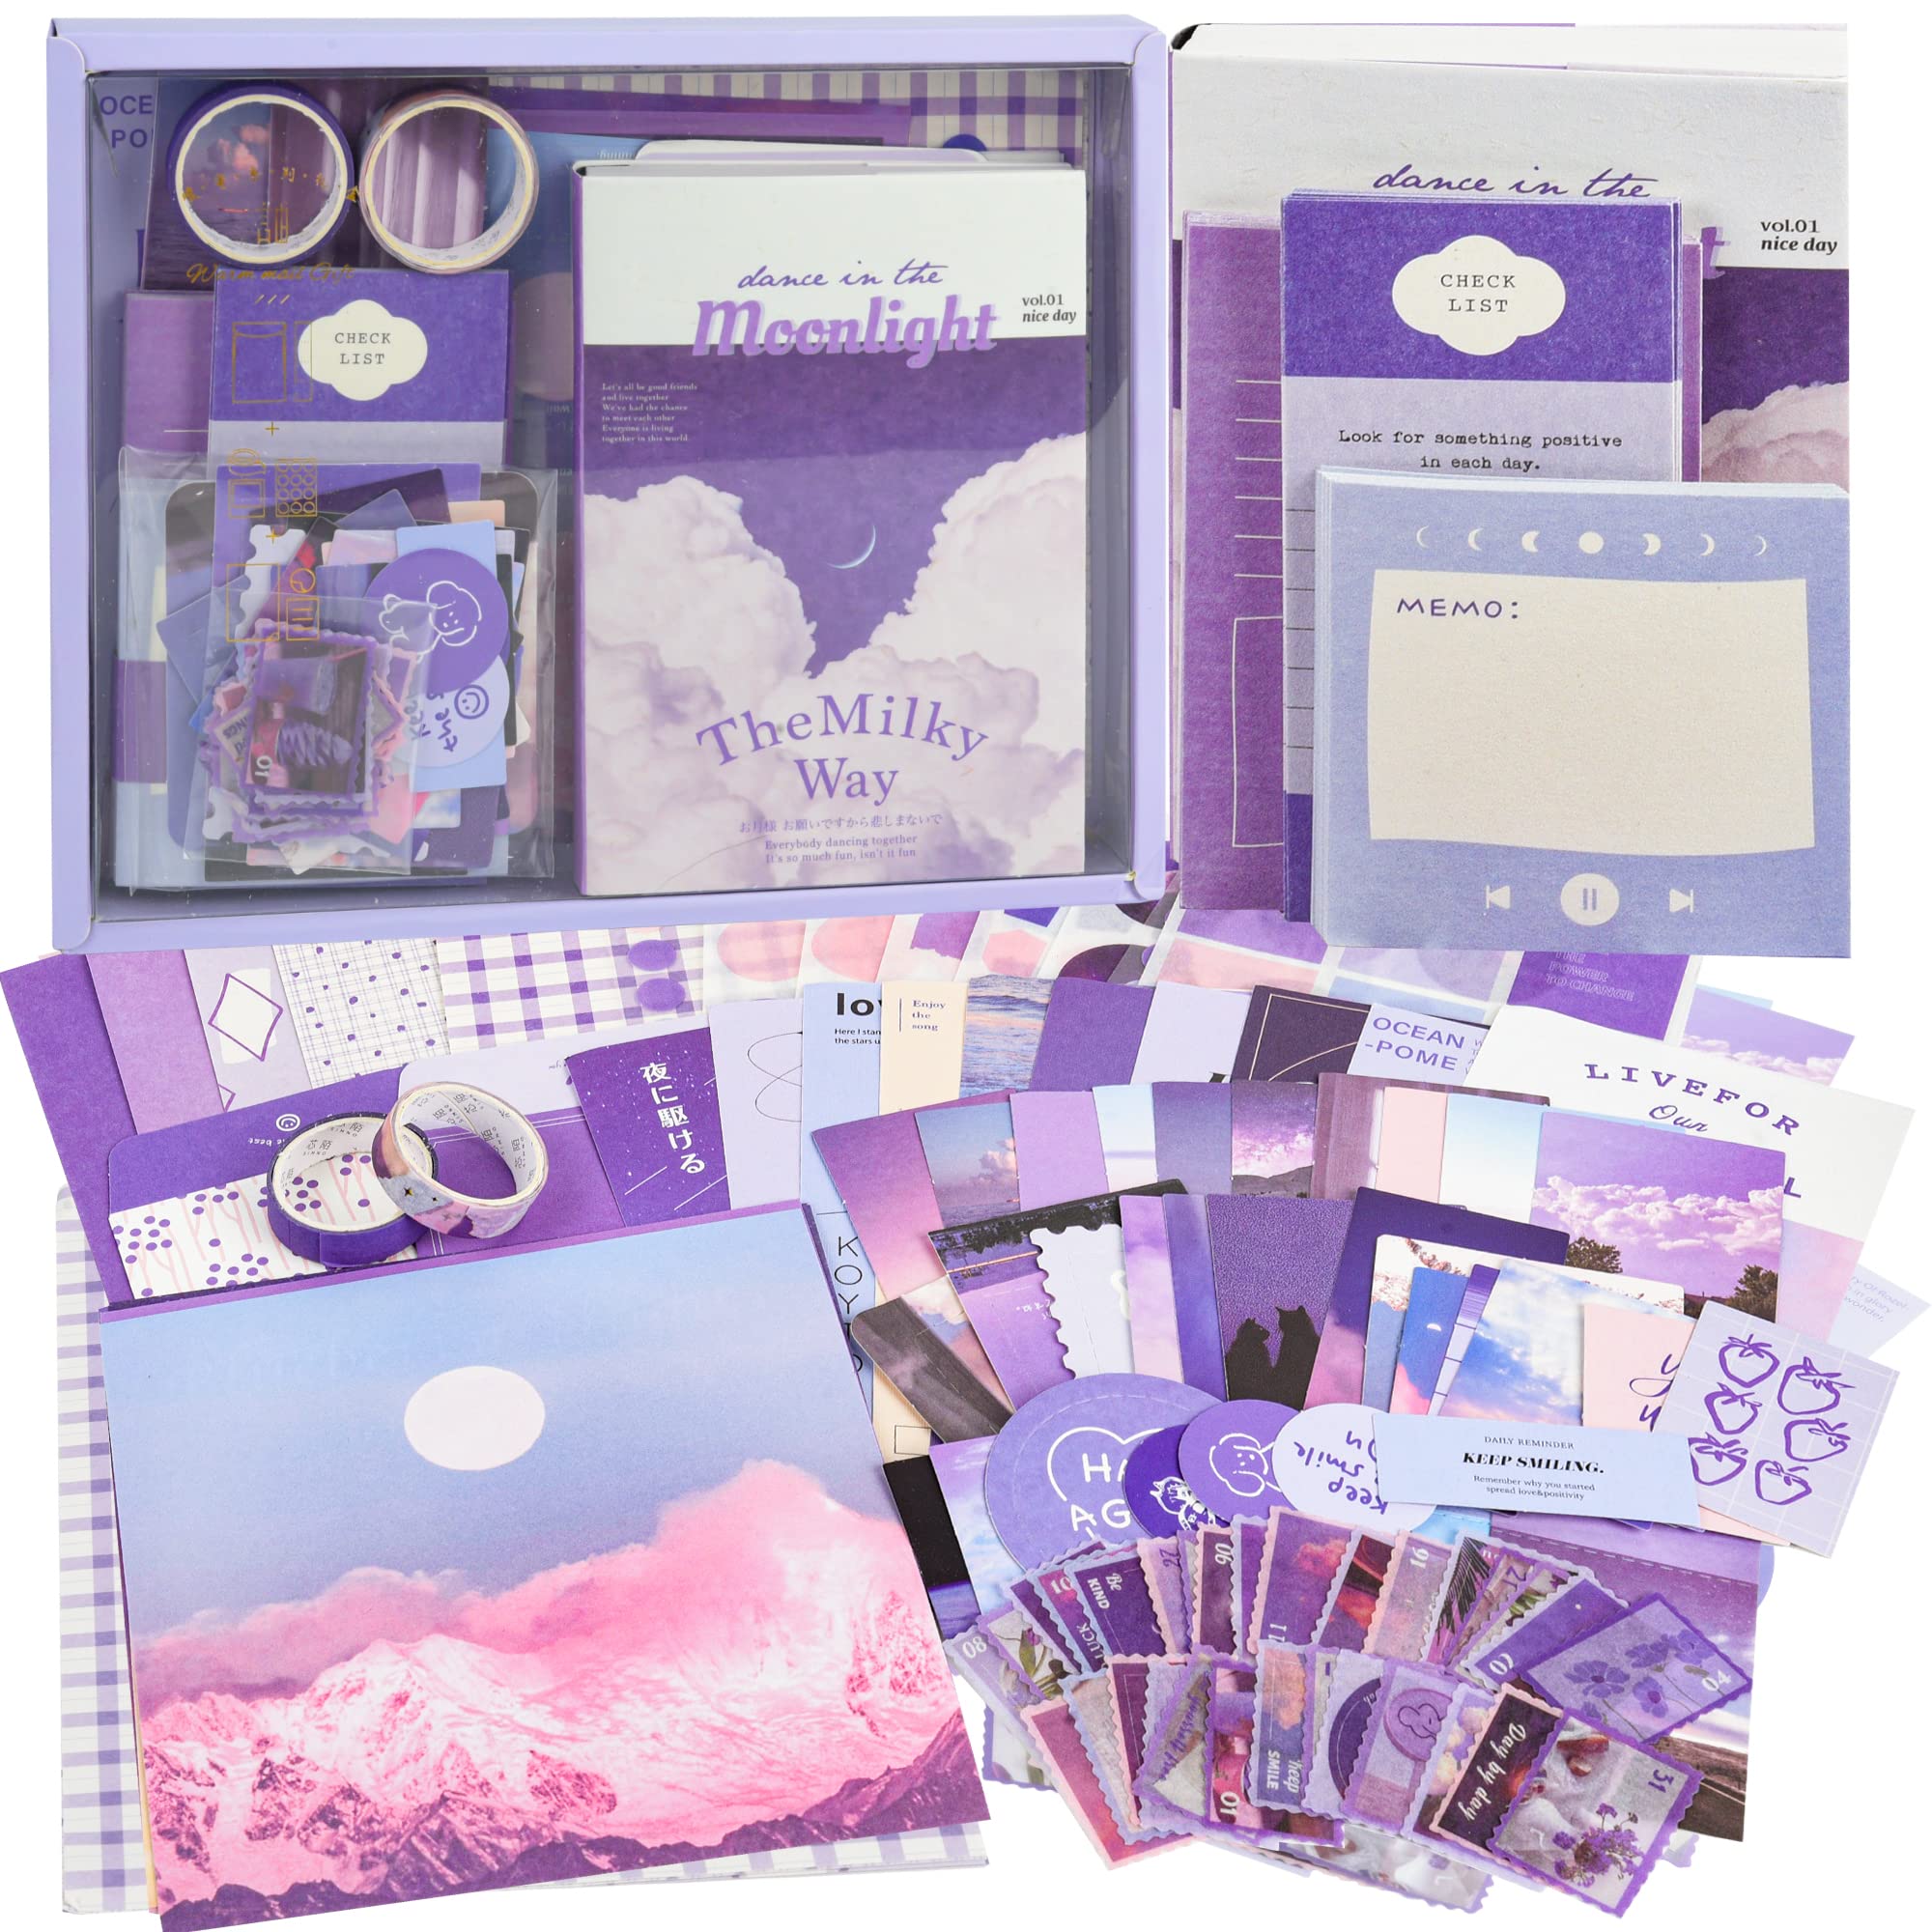 DIY Journal Kit for Girls, Personalized Diary & Scrapbook Stuff for Teens  Gir